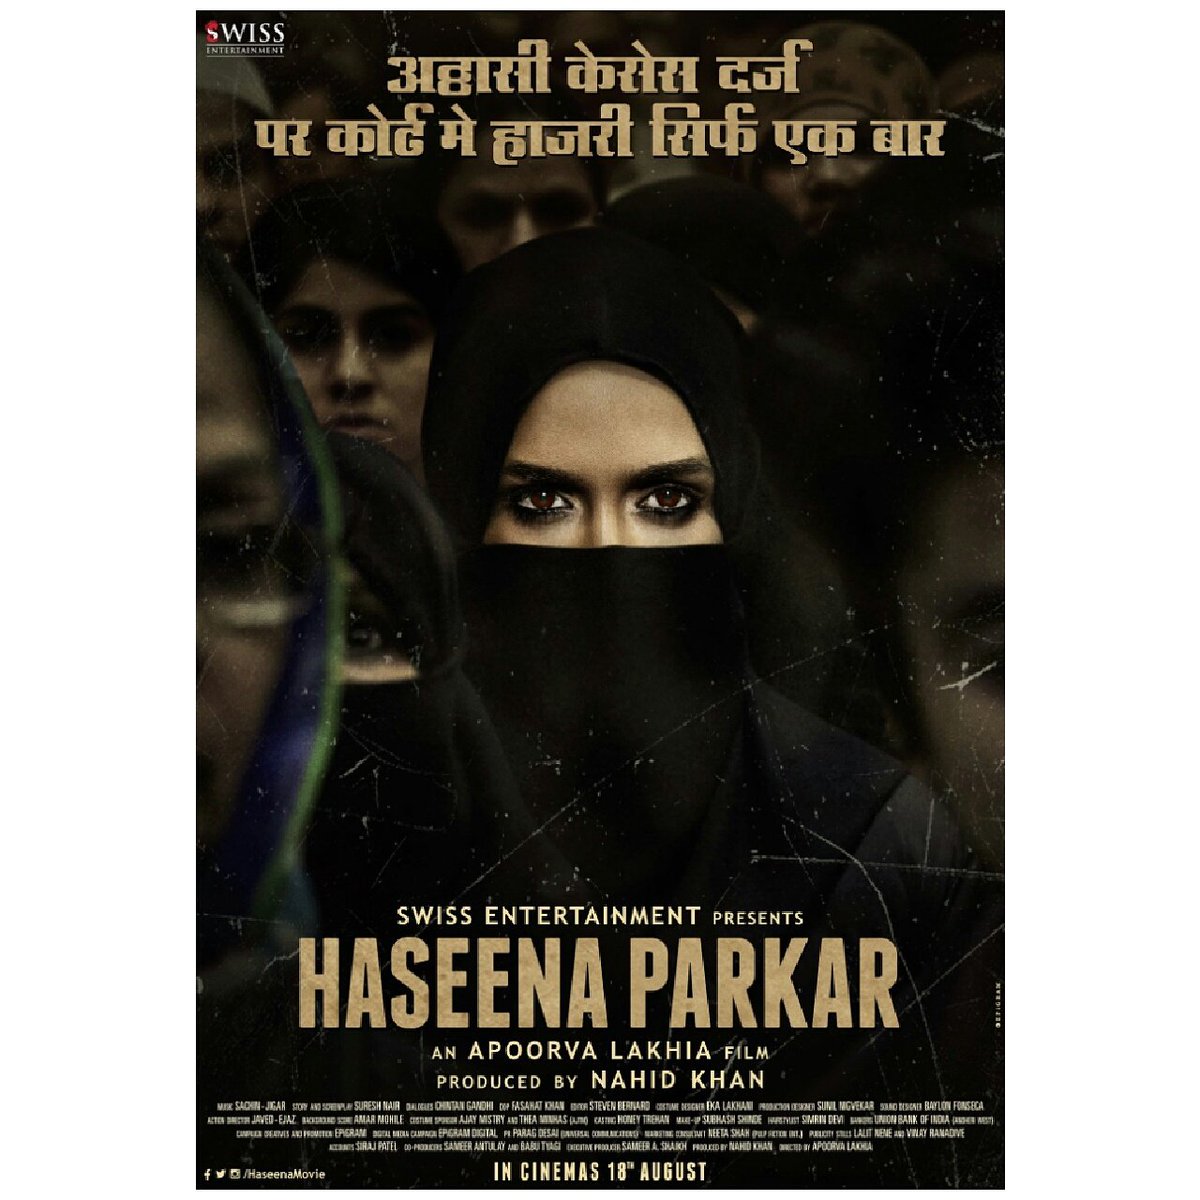 So here's another teaser poster of #HaseenaParkar Hope you guys like it #HaseenaTeaserPoster @haseenamovie @ApoorvaLakhia